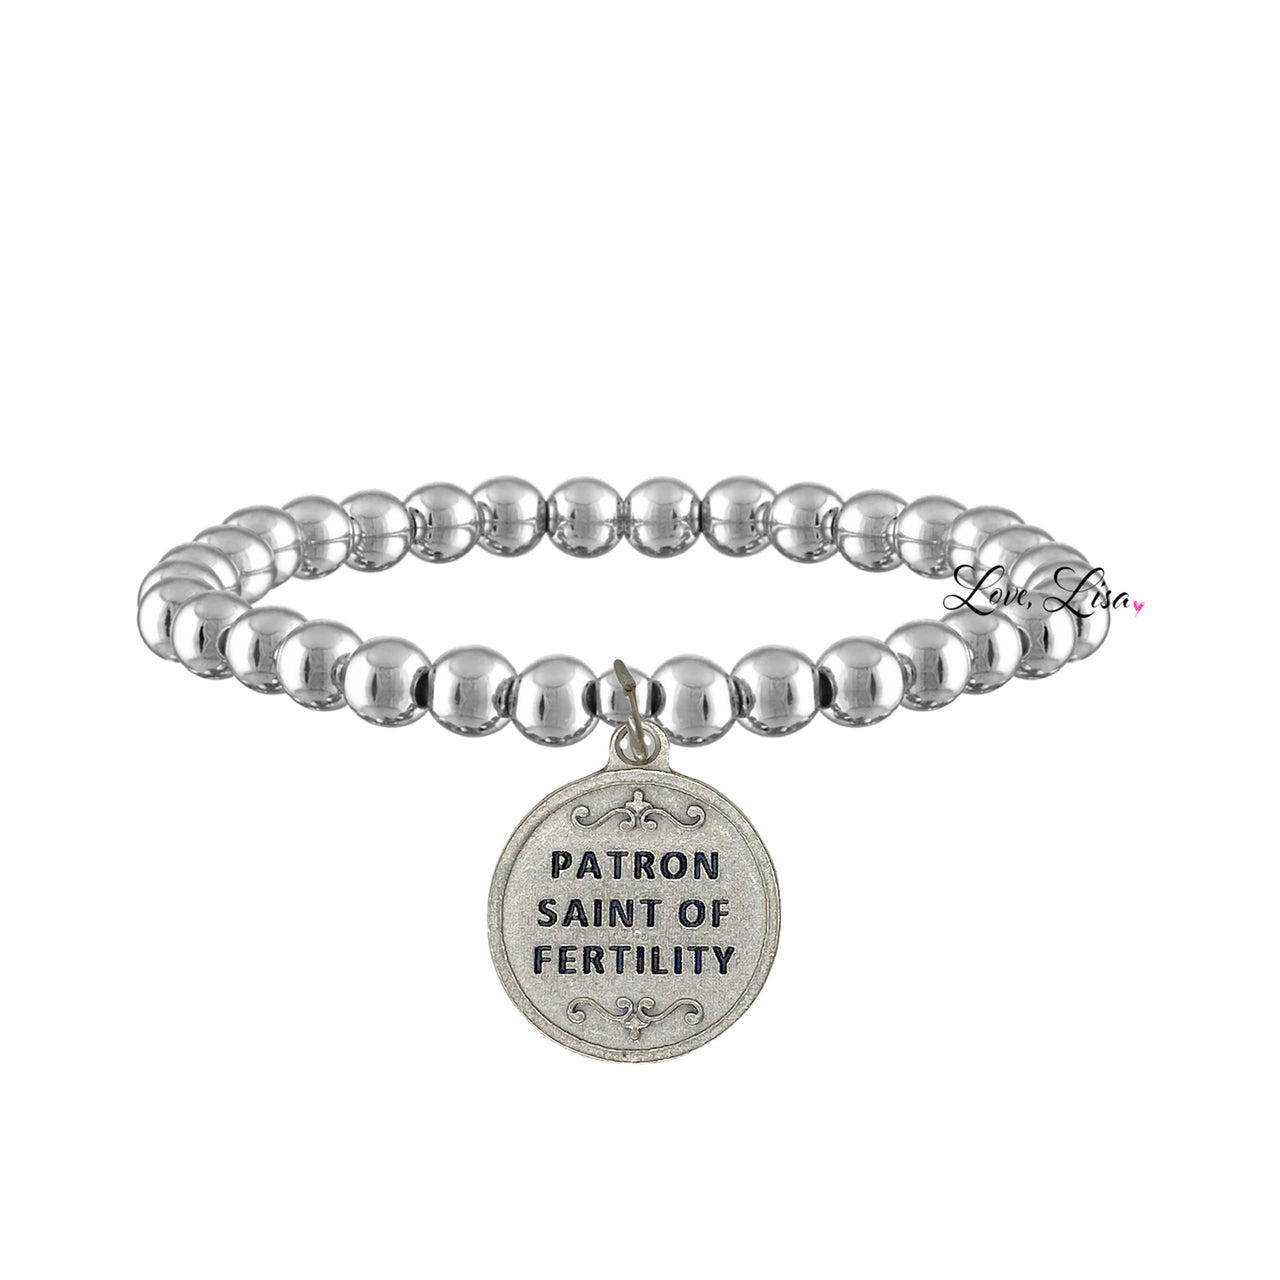 St. Gerard Fertility Bracelet